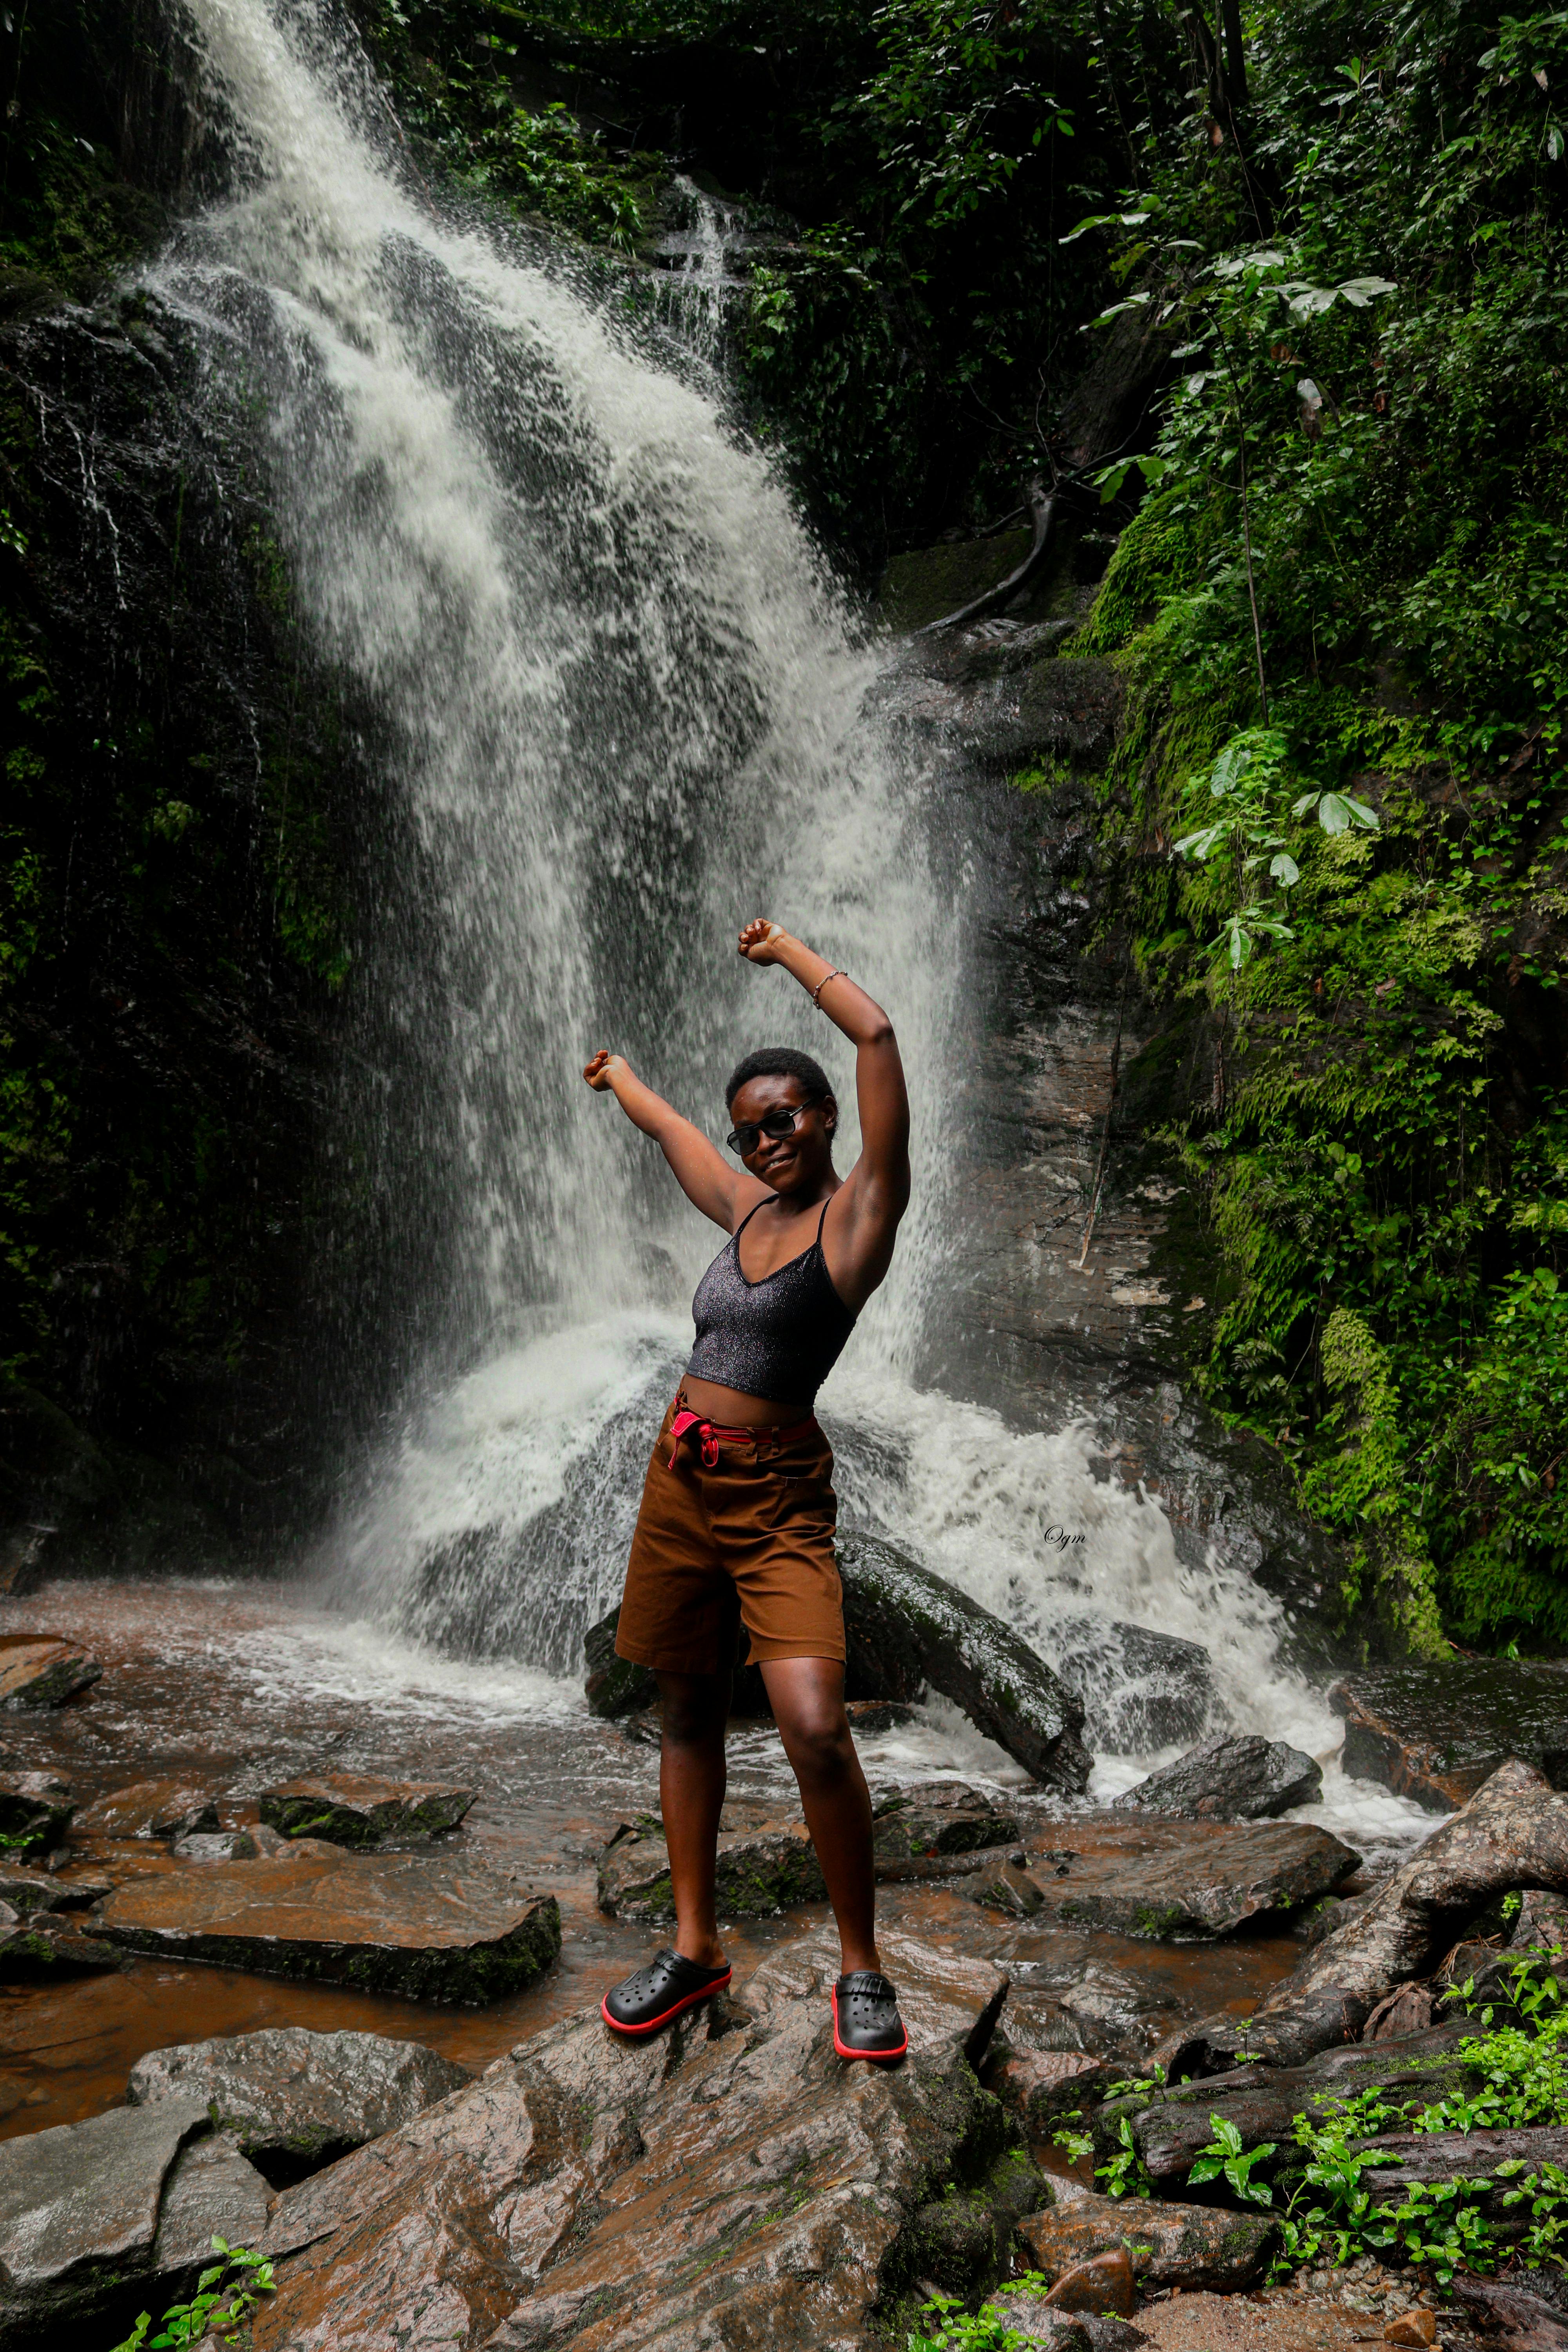 Out chasing waterfalls 🌊❤️ #explorepage #explore #waterfall #baliwaterfall  #swimwear #bali #fypage | Instagram